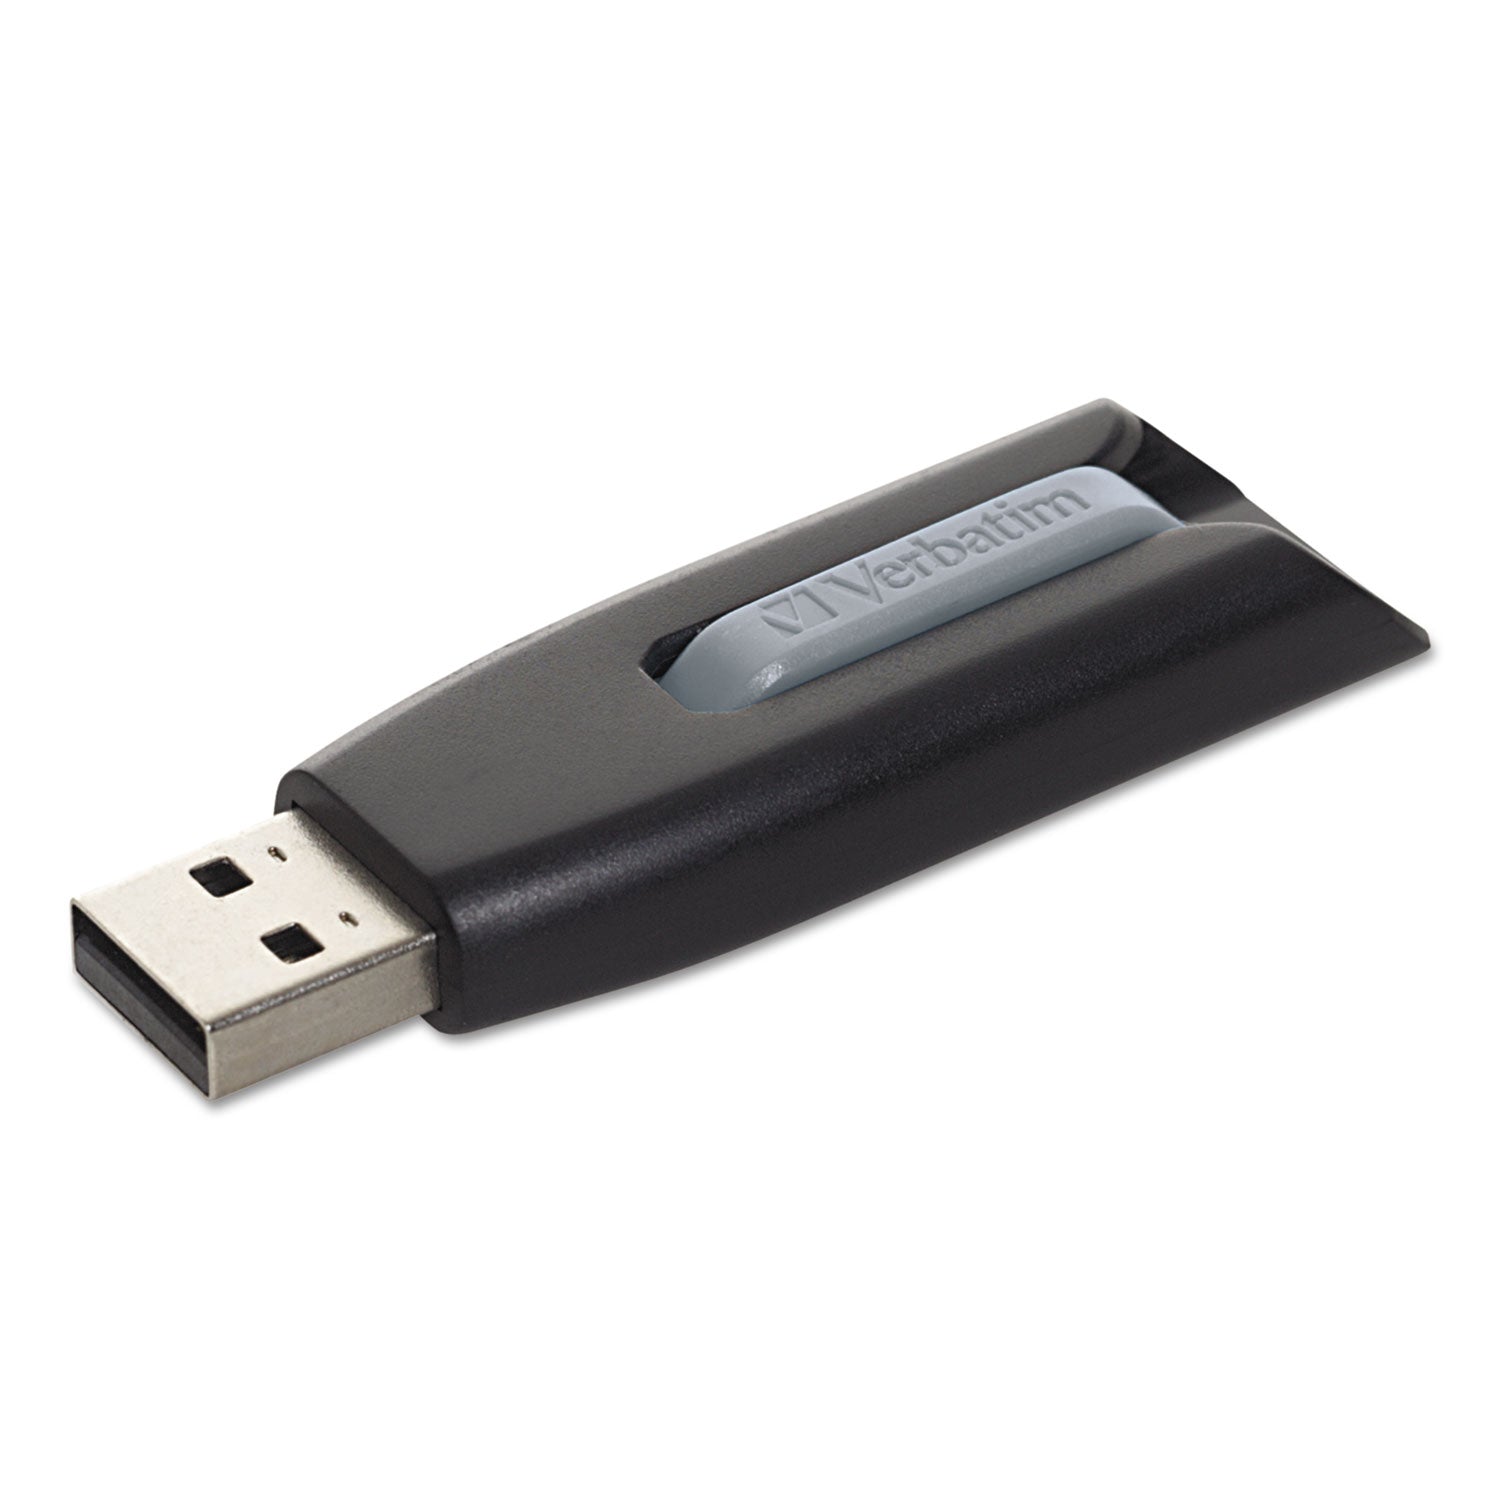 Store 'n' Go V3 USB 3.0 Drive, 128 GB, Black/Gray - 